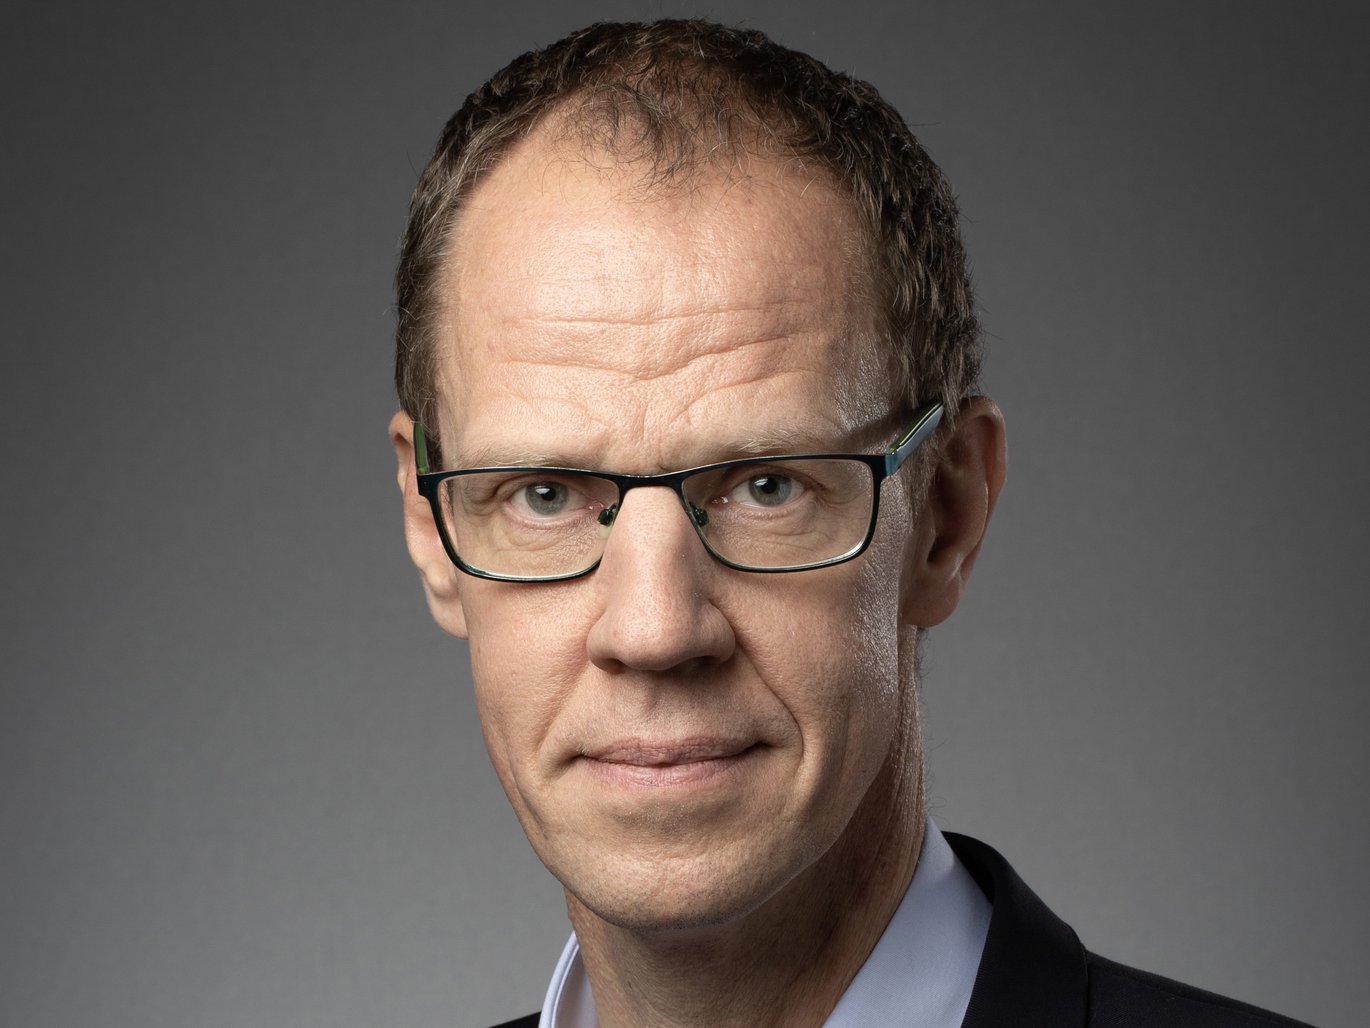 Professor Peter Bjerre Mortensen. Photo: Lars Kruse/AU Photo